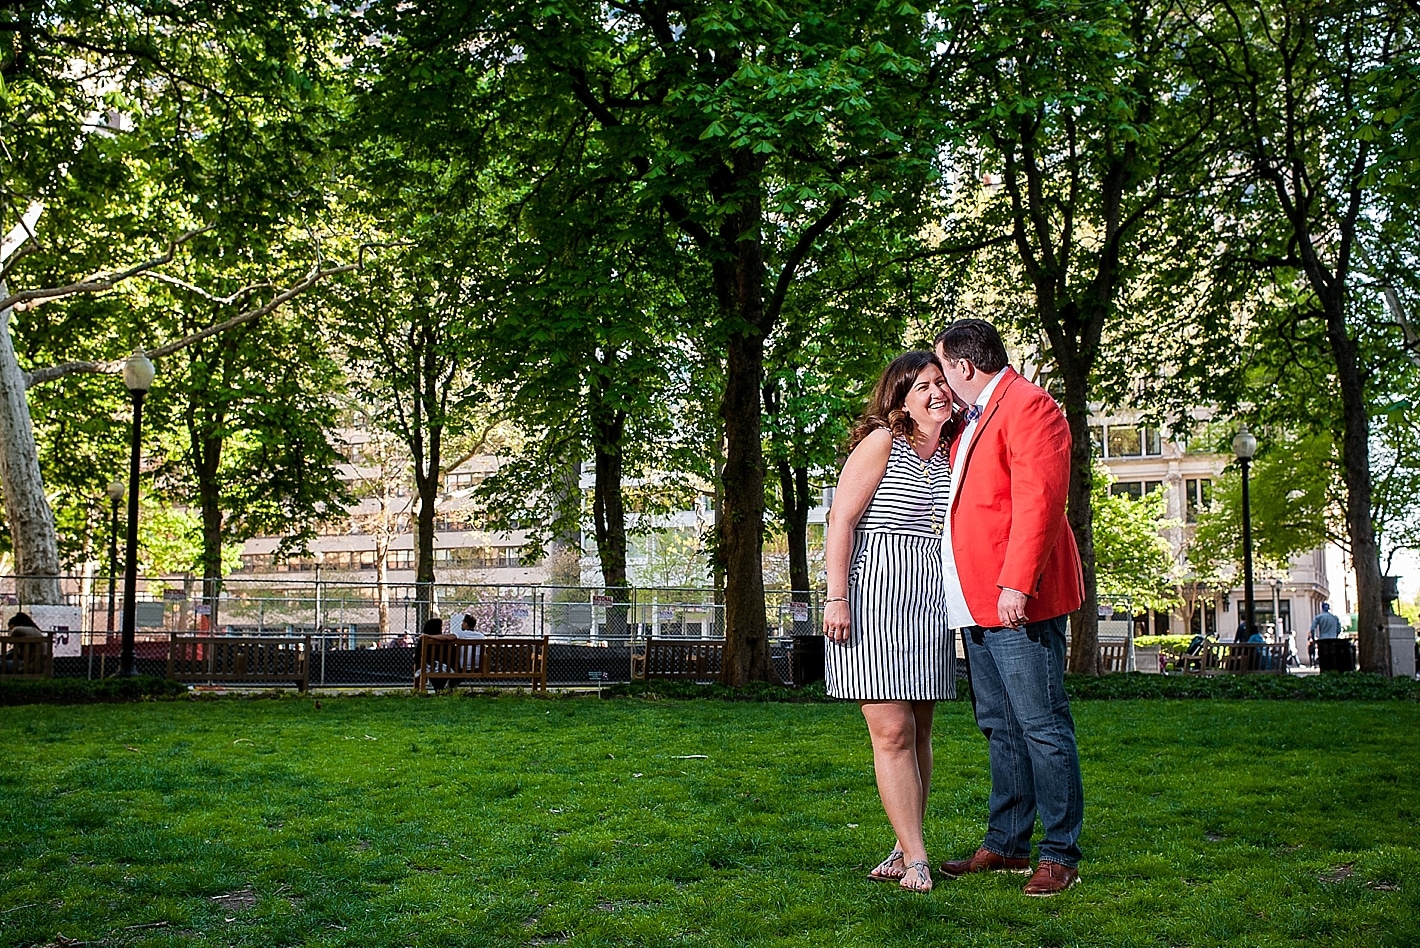 Rittenhouse Square Wedding Photography